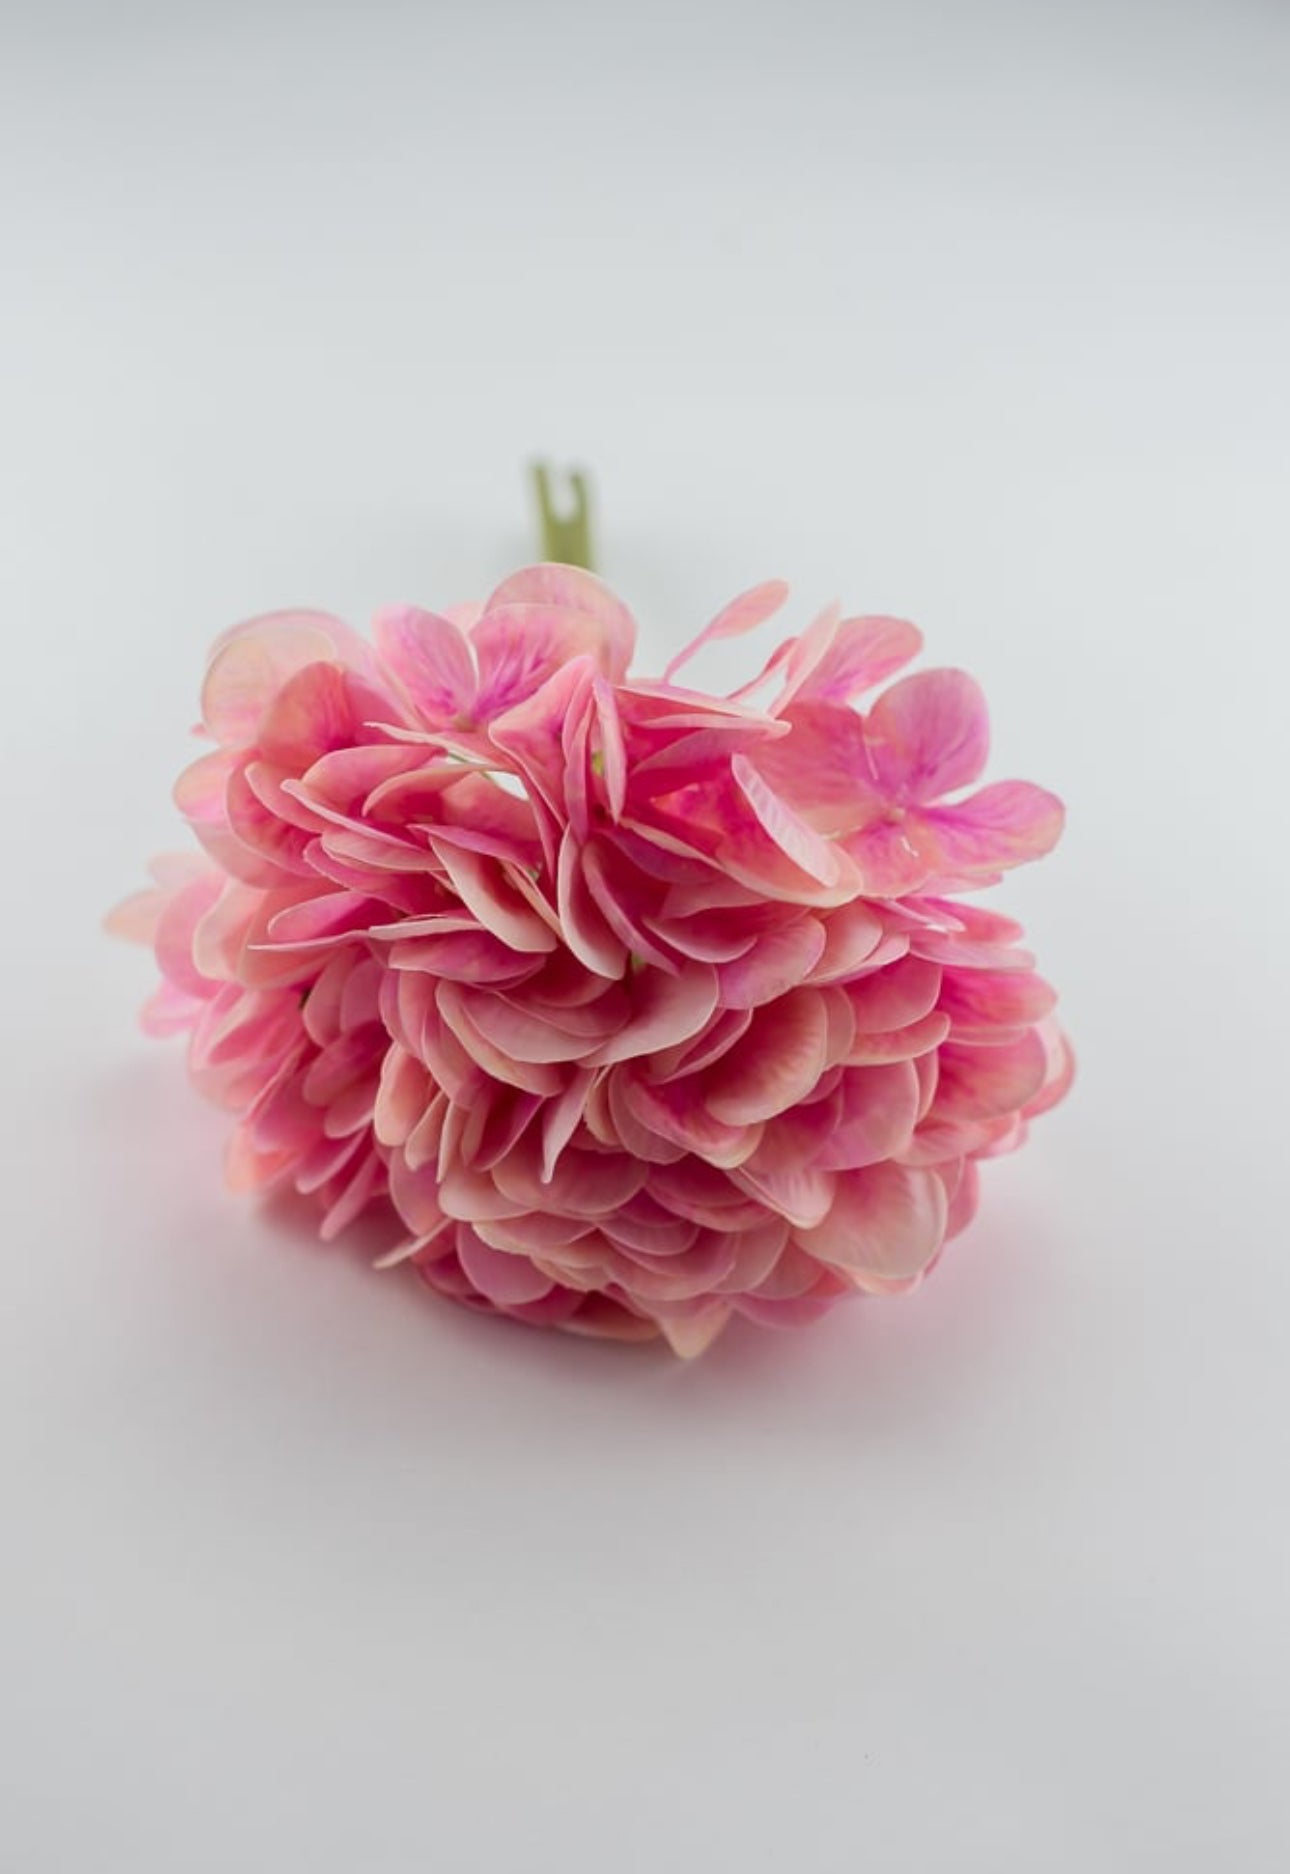 Hydrangeas bundle - natural touch - cerise pink - Greenery Marketartificial flowers5608-CER